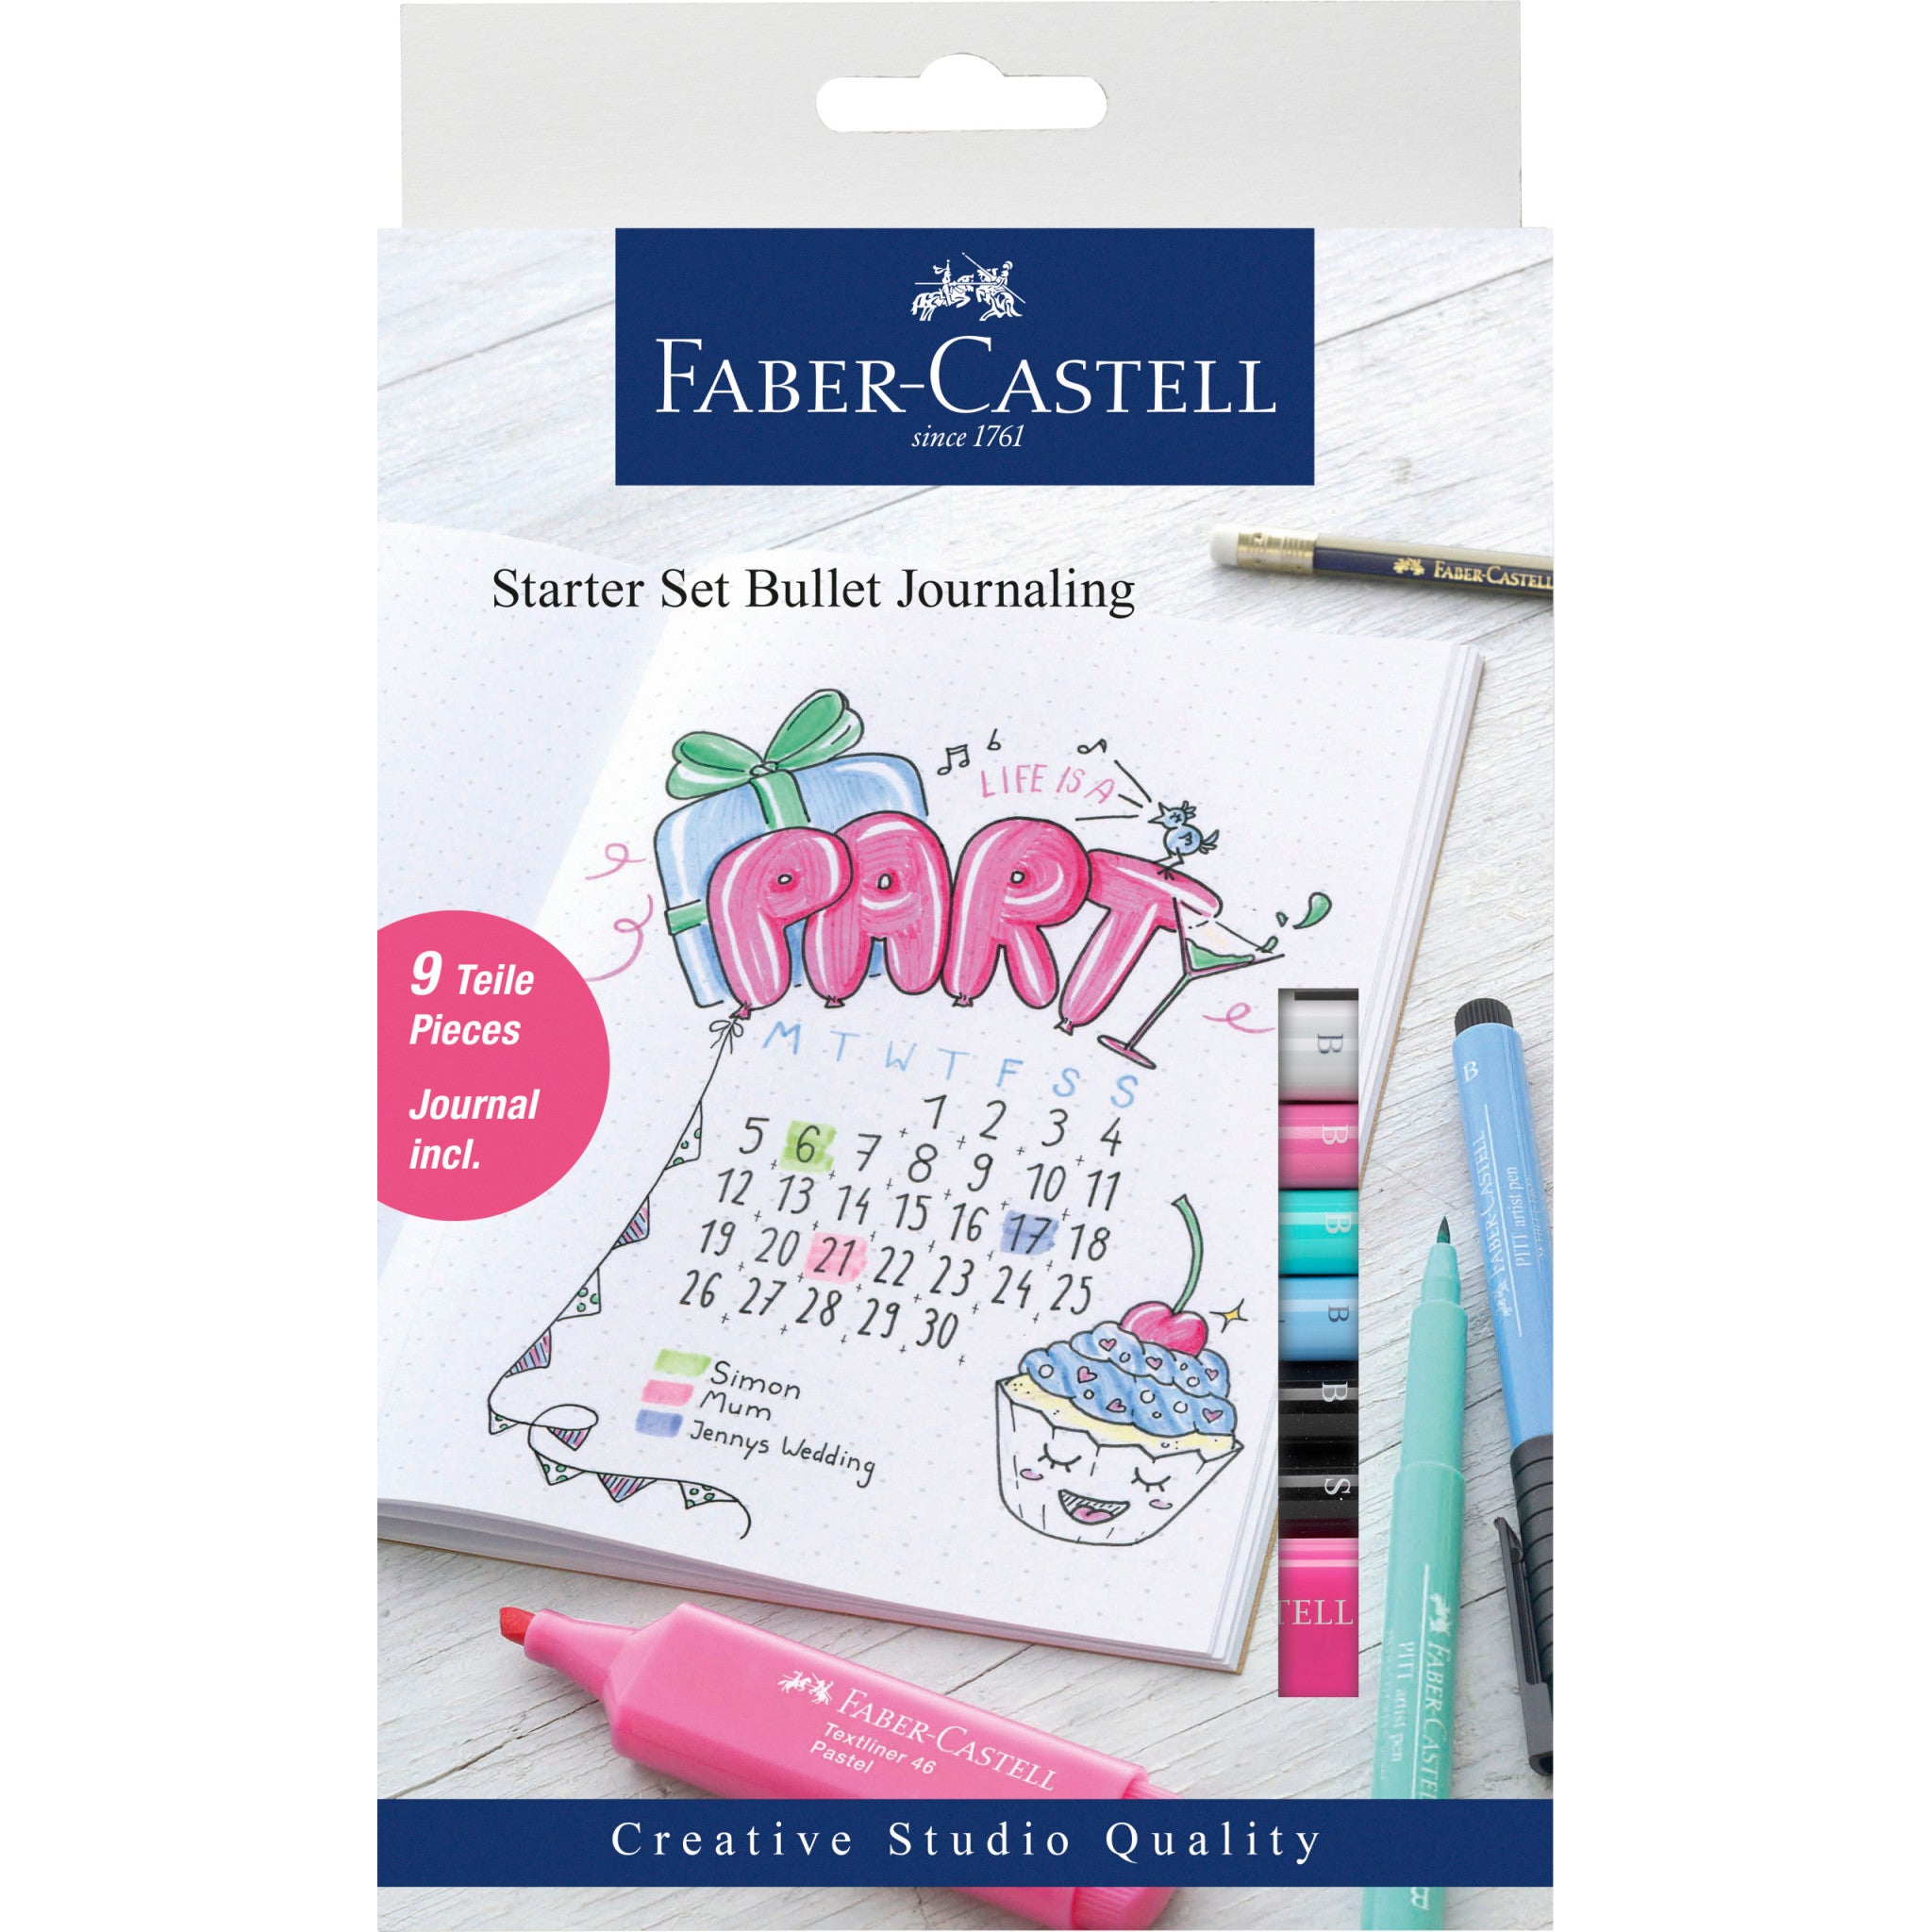 Faber-Castell World Colors 27 EcoPencils